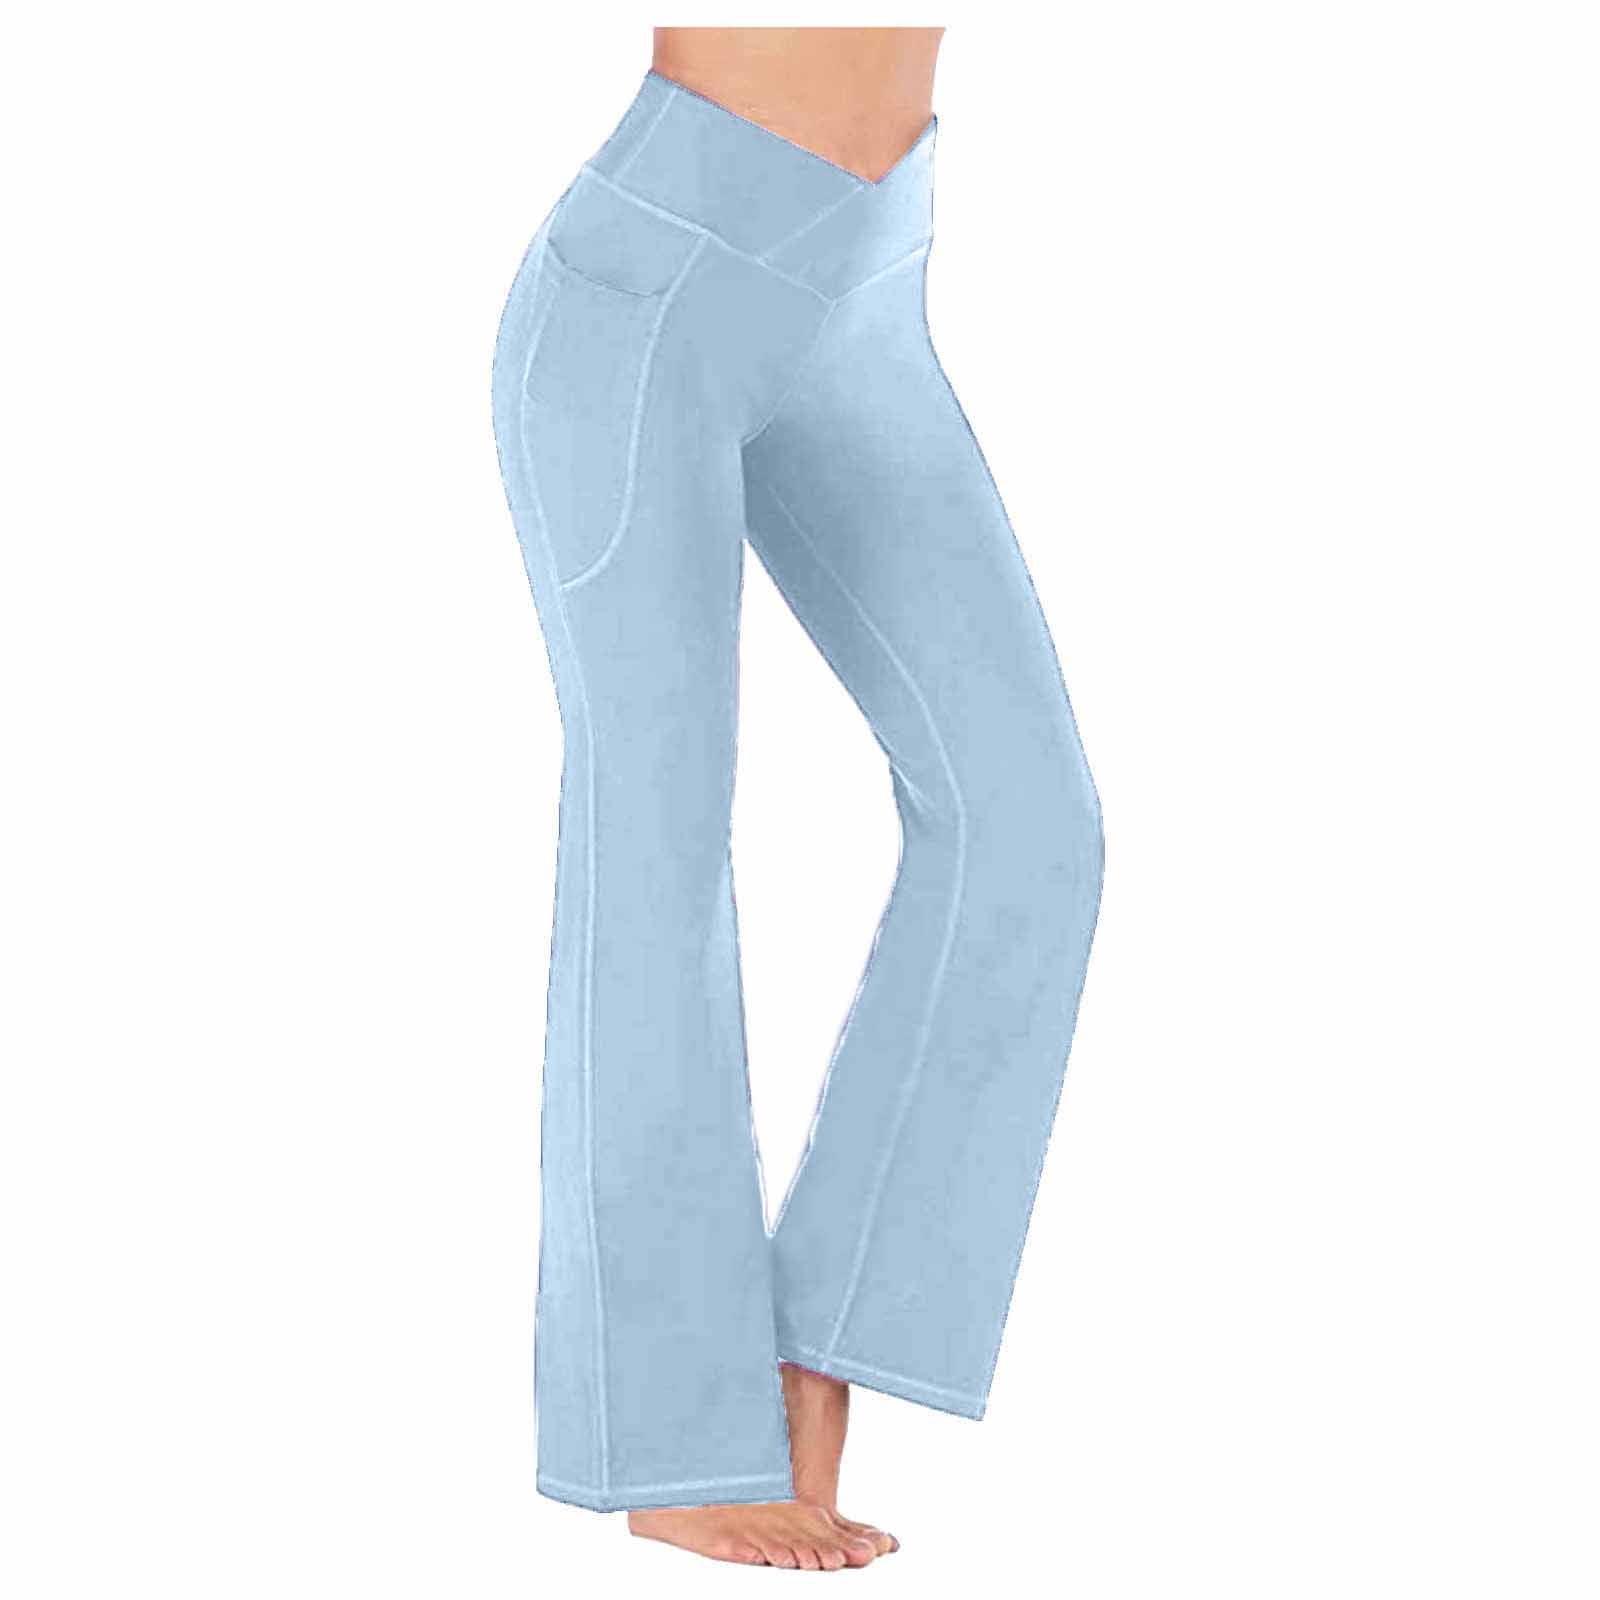 Hfyihgf Bootcut Yoga Pants with Pockets for Women Tummy Control